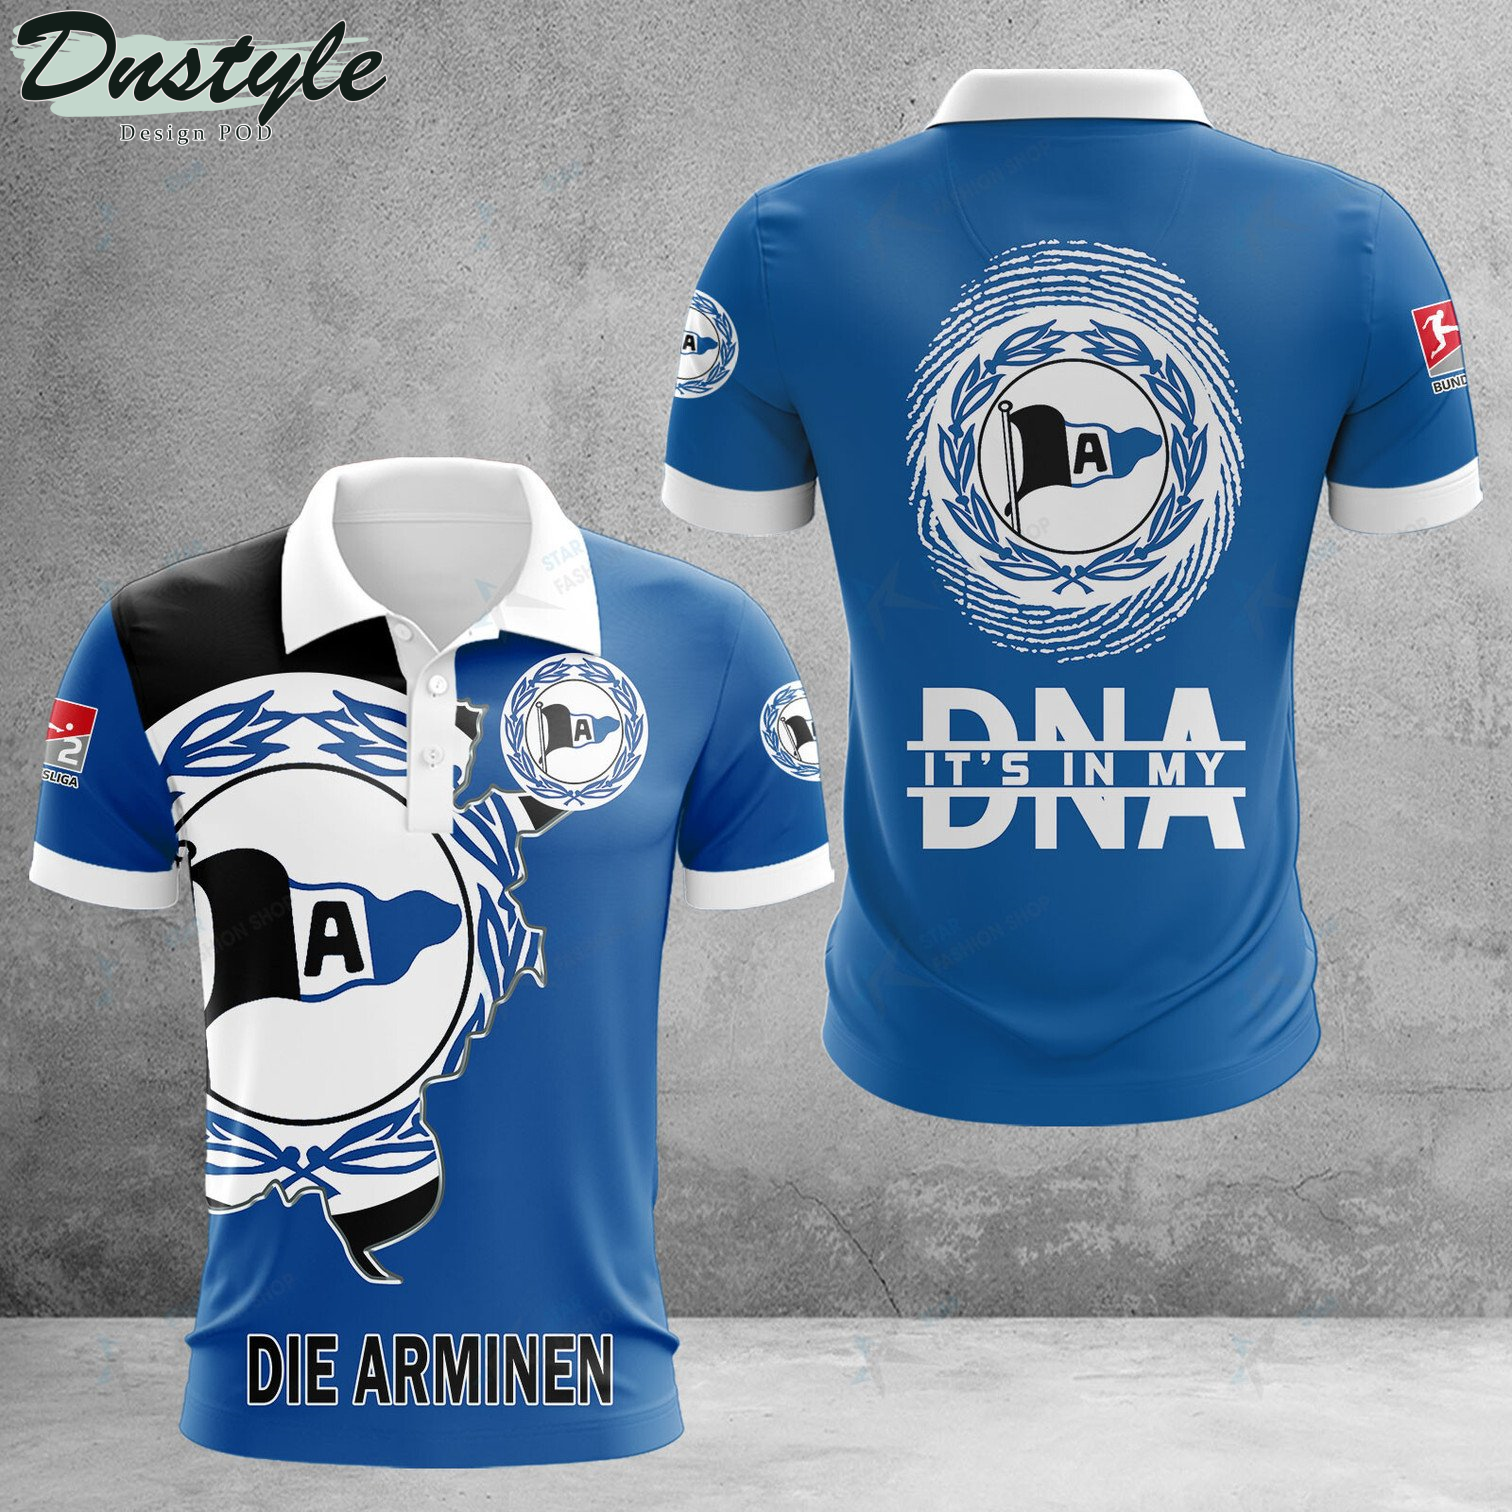 DSC Arminia Bielefeld it's in my DNA polo shirt